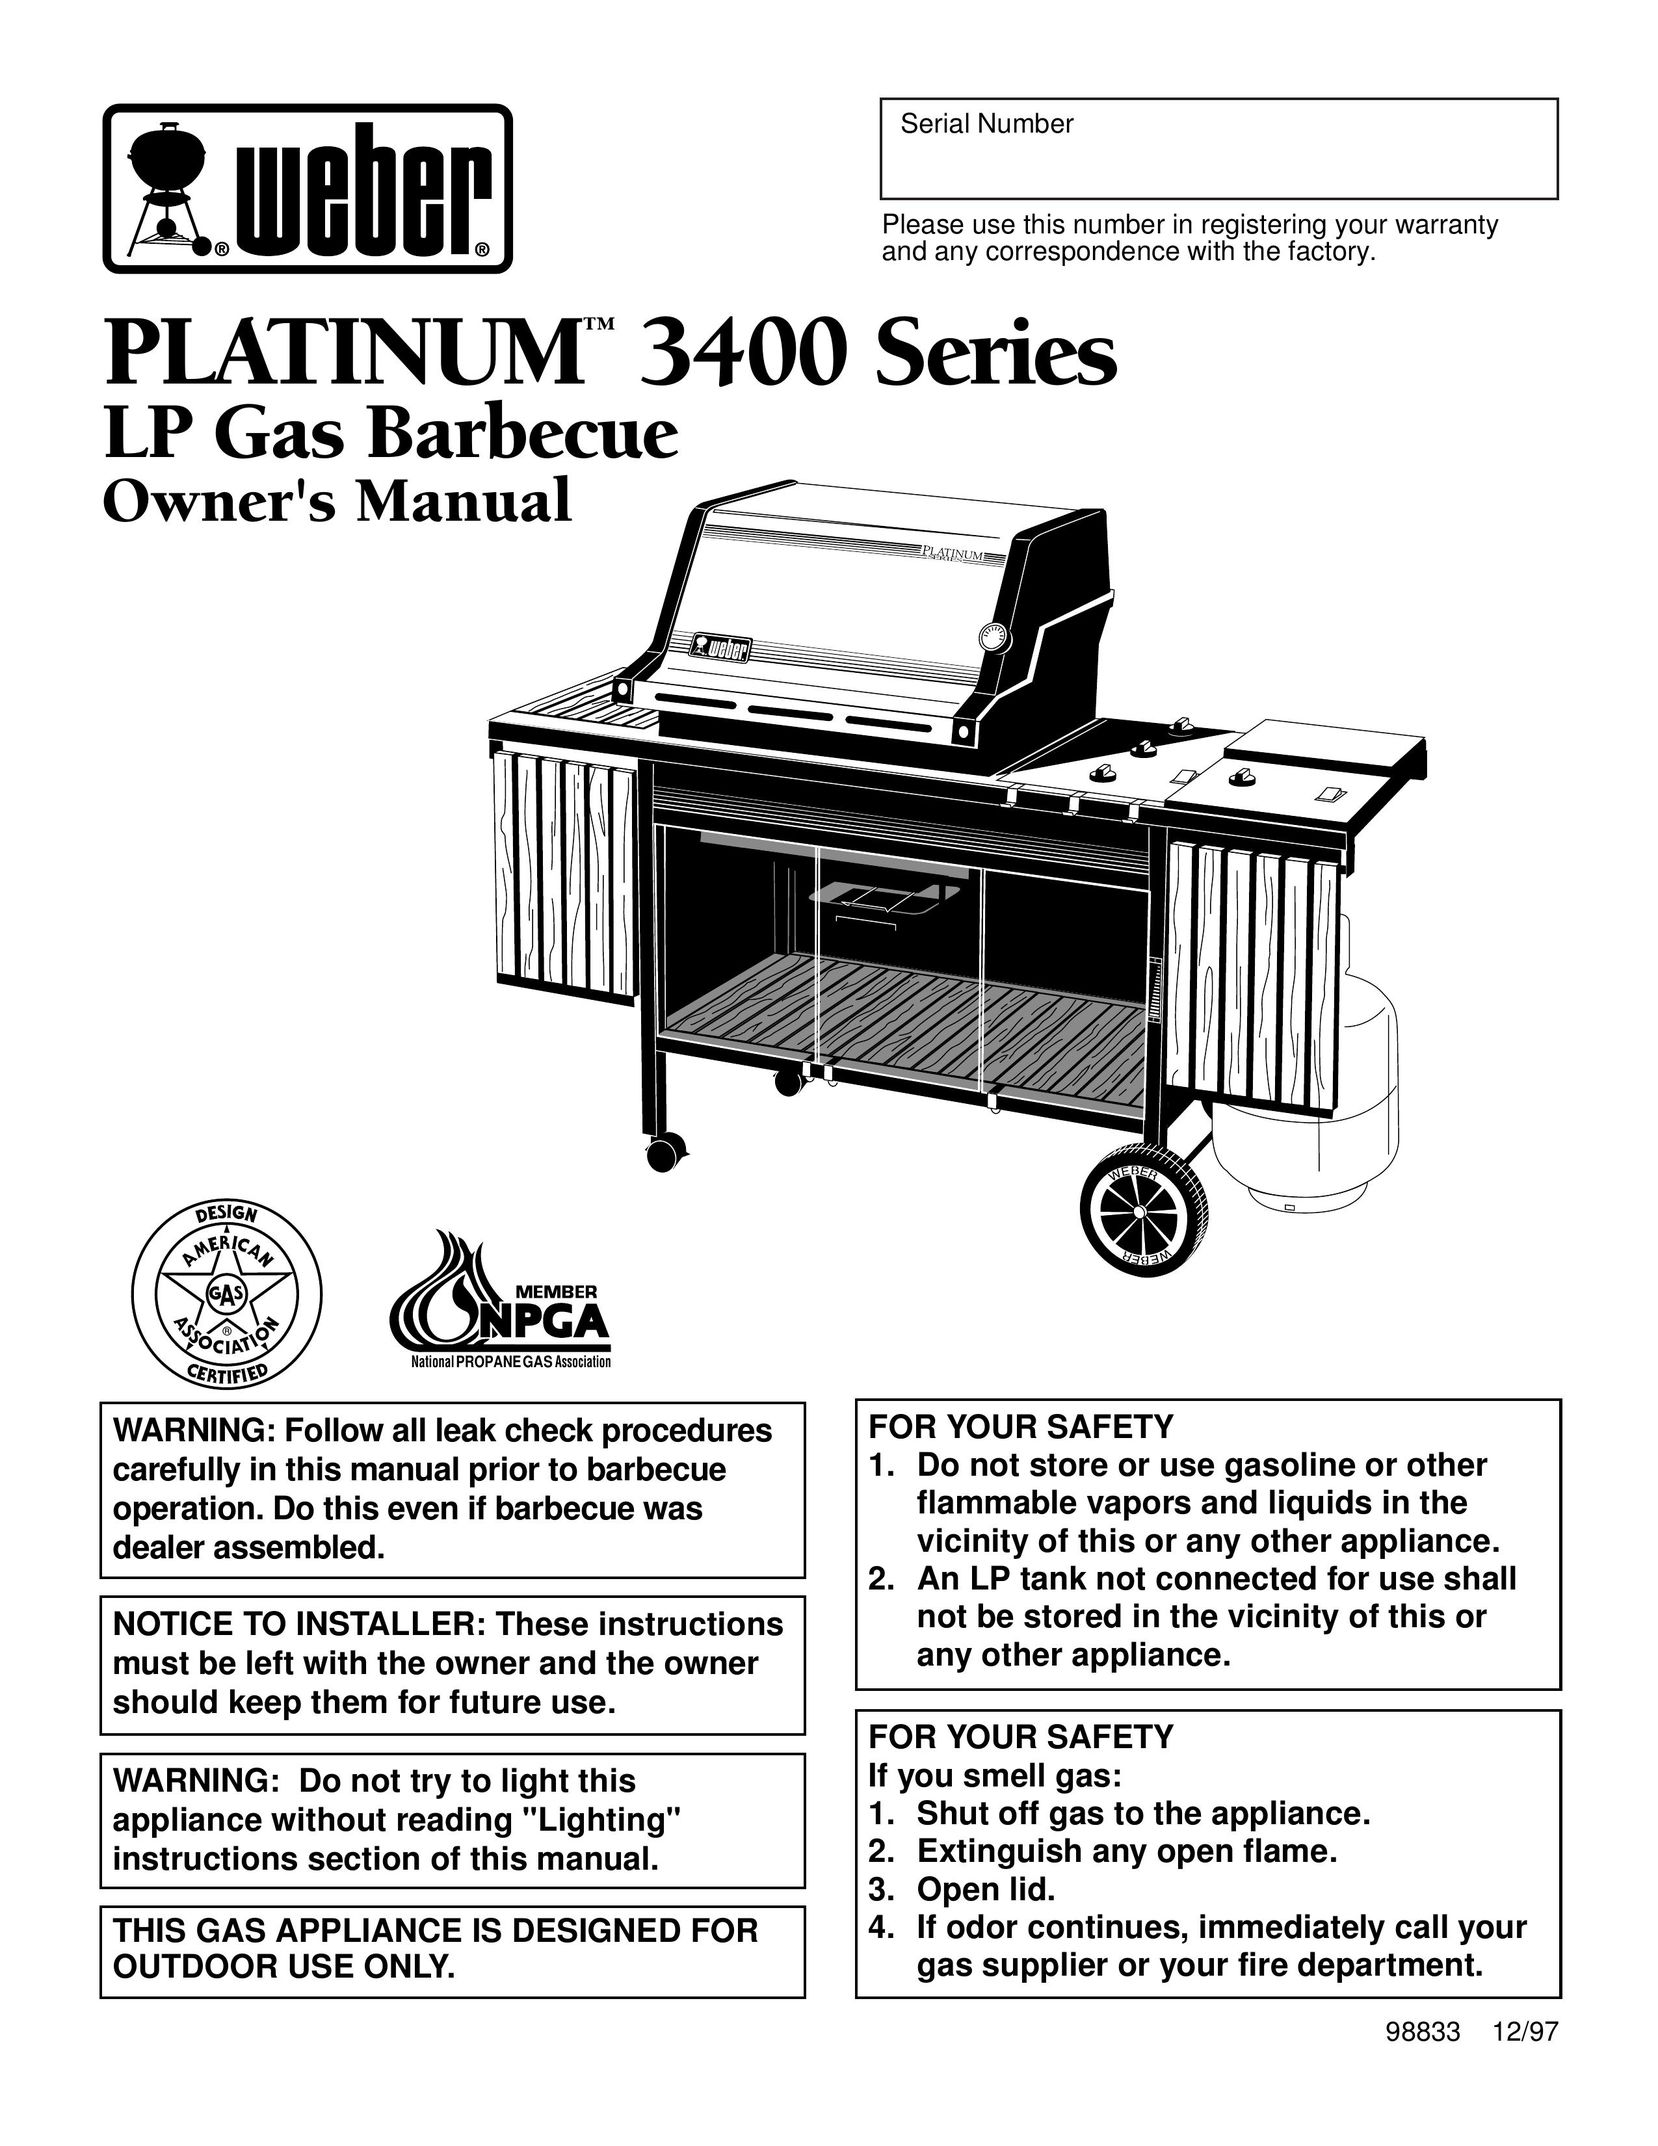 Weber 3400 Series Burner User Manual